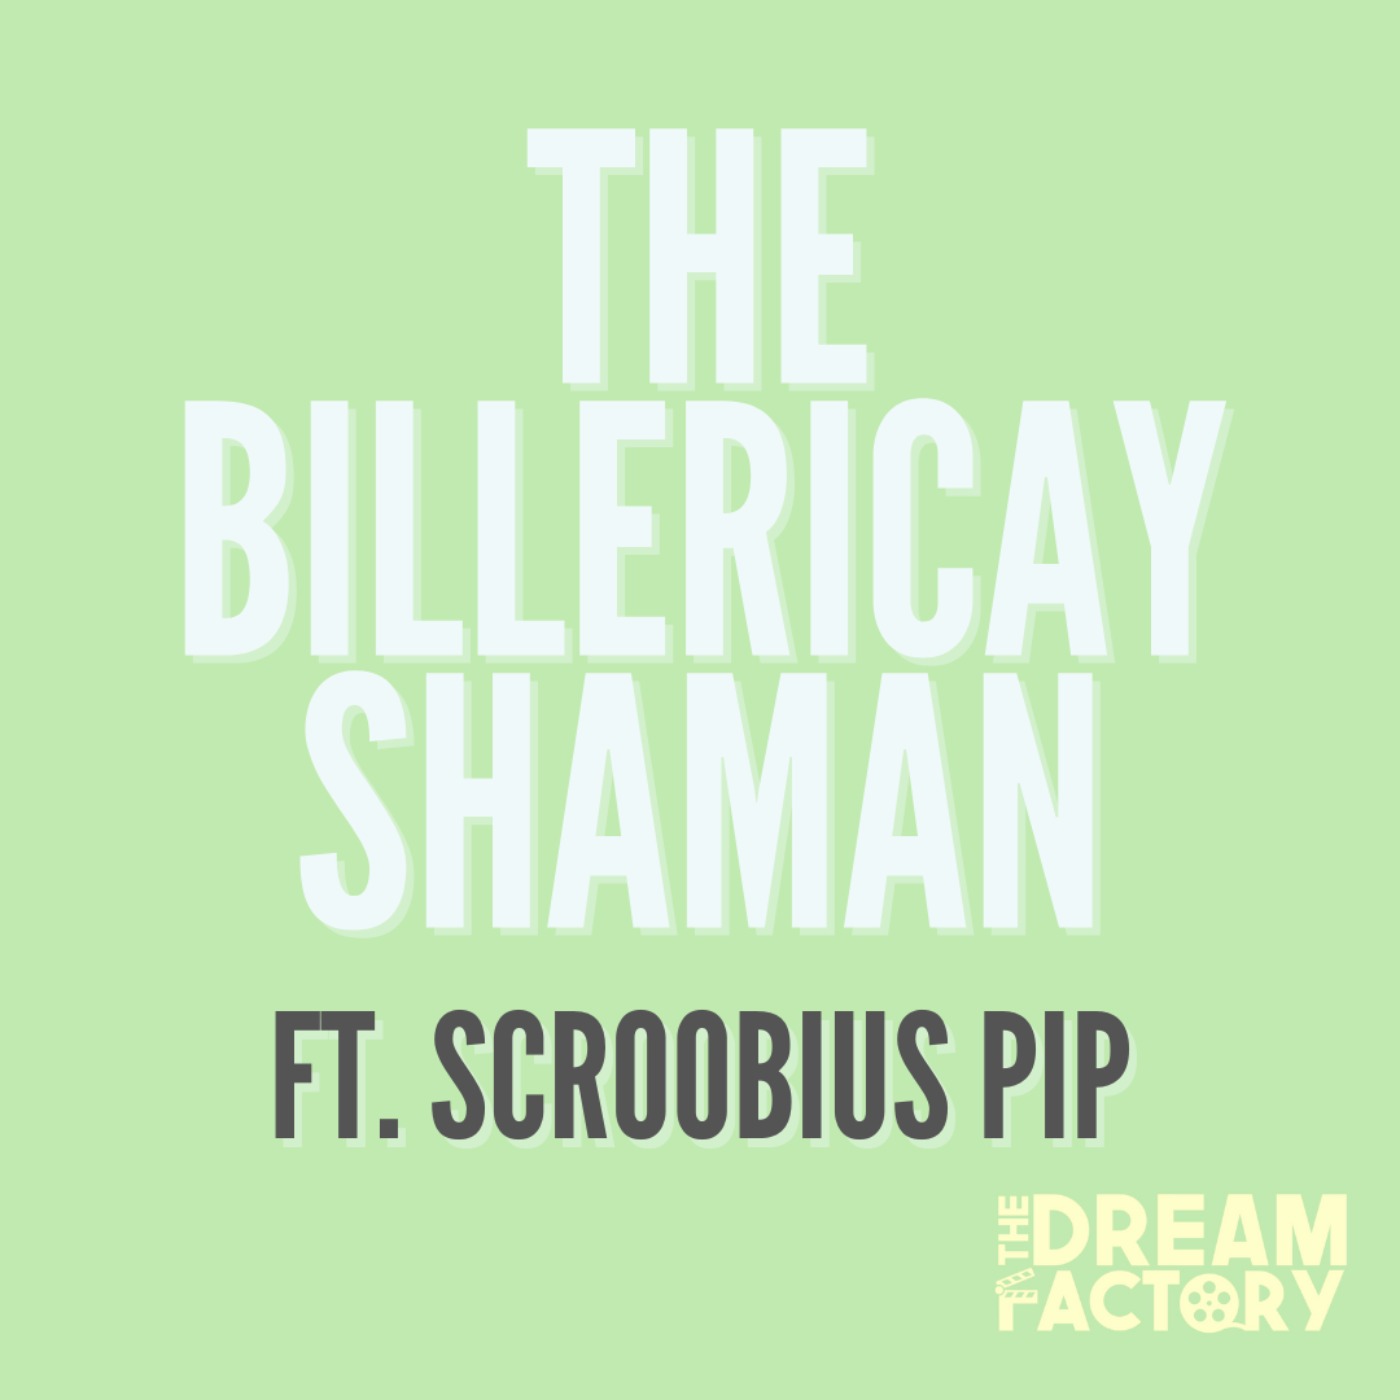 The Billericay Shaman Ft. Scroobius Pip